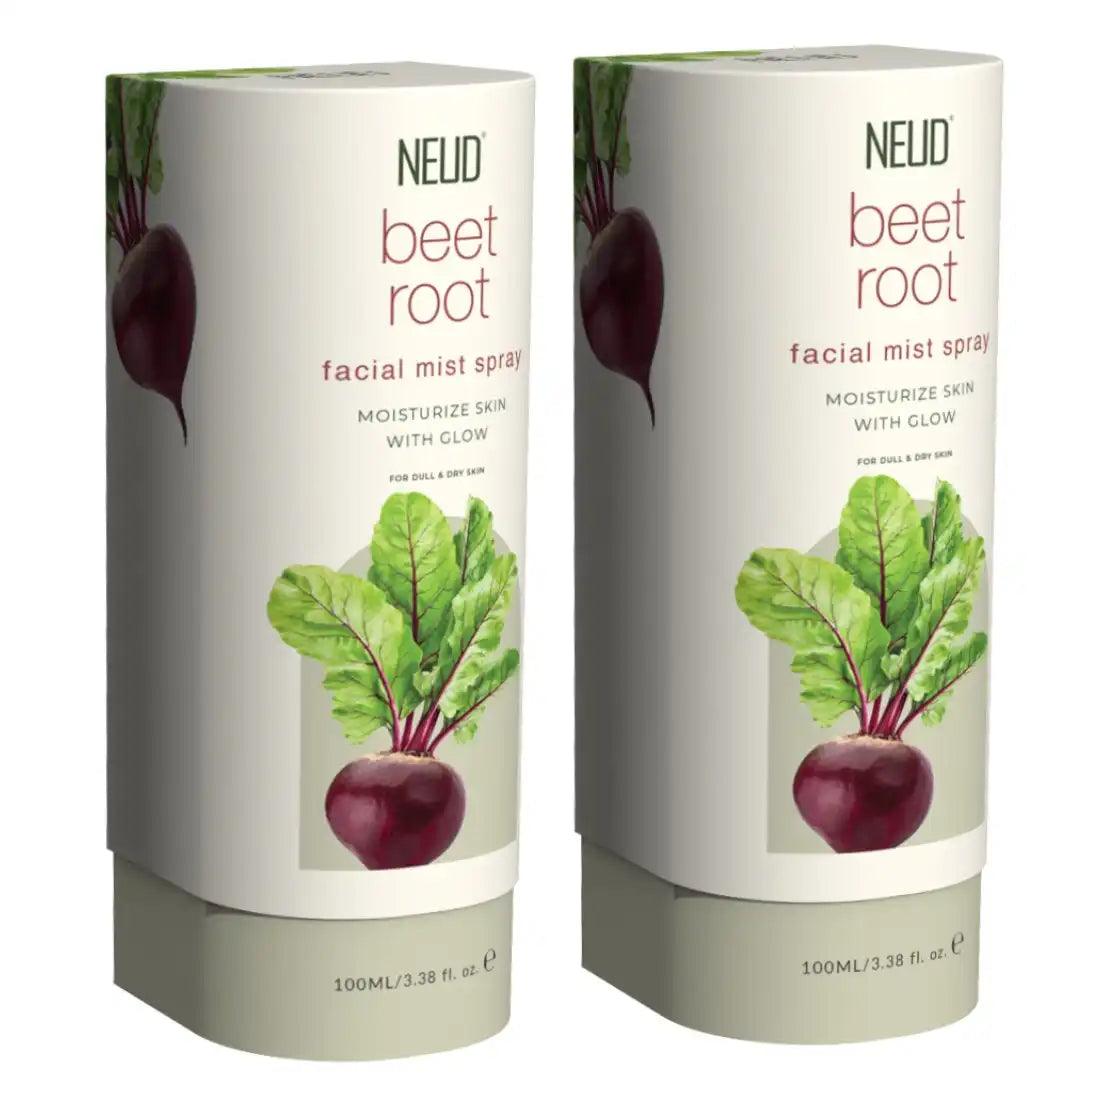 Buy 2 Packs NEUD Beet Root Facial Mist Spray 100ml For Dull and Dry Skin - everteen-neud.com